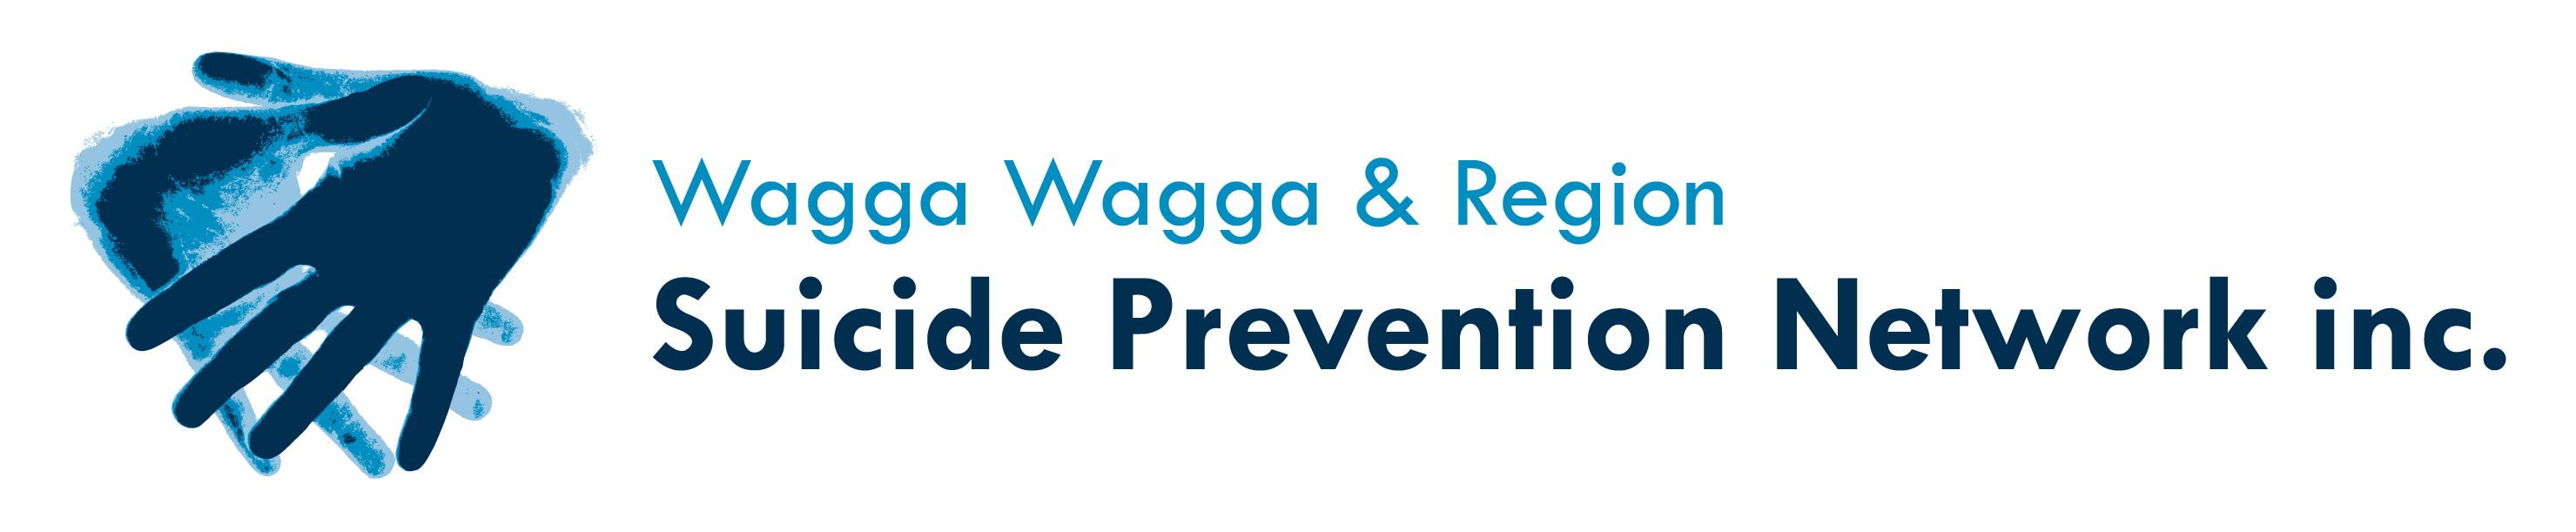 Wagga Wagga & Region Suicide Prevention Network Inc logo